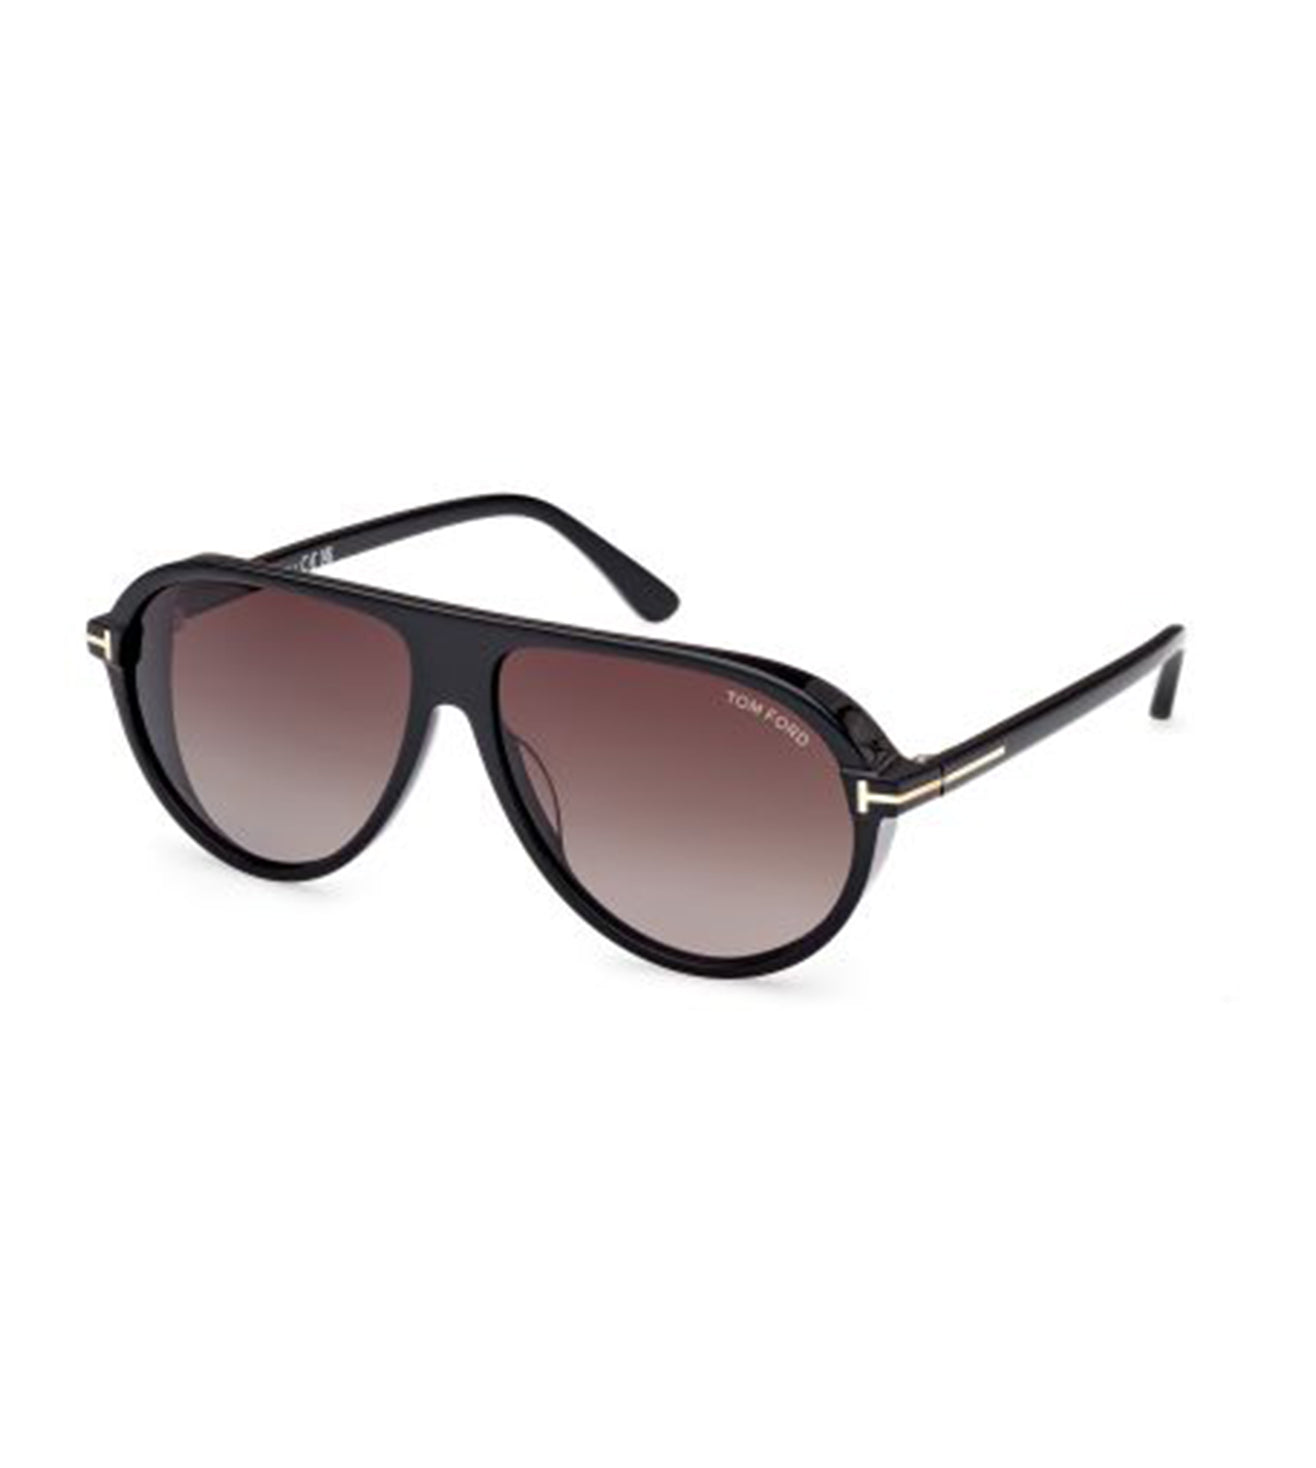 Tom Ford Marcus Men's Grey Gradient Aviator Sunglasses